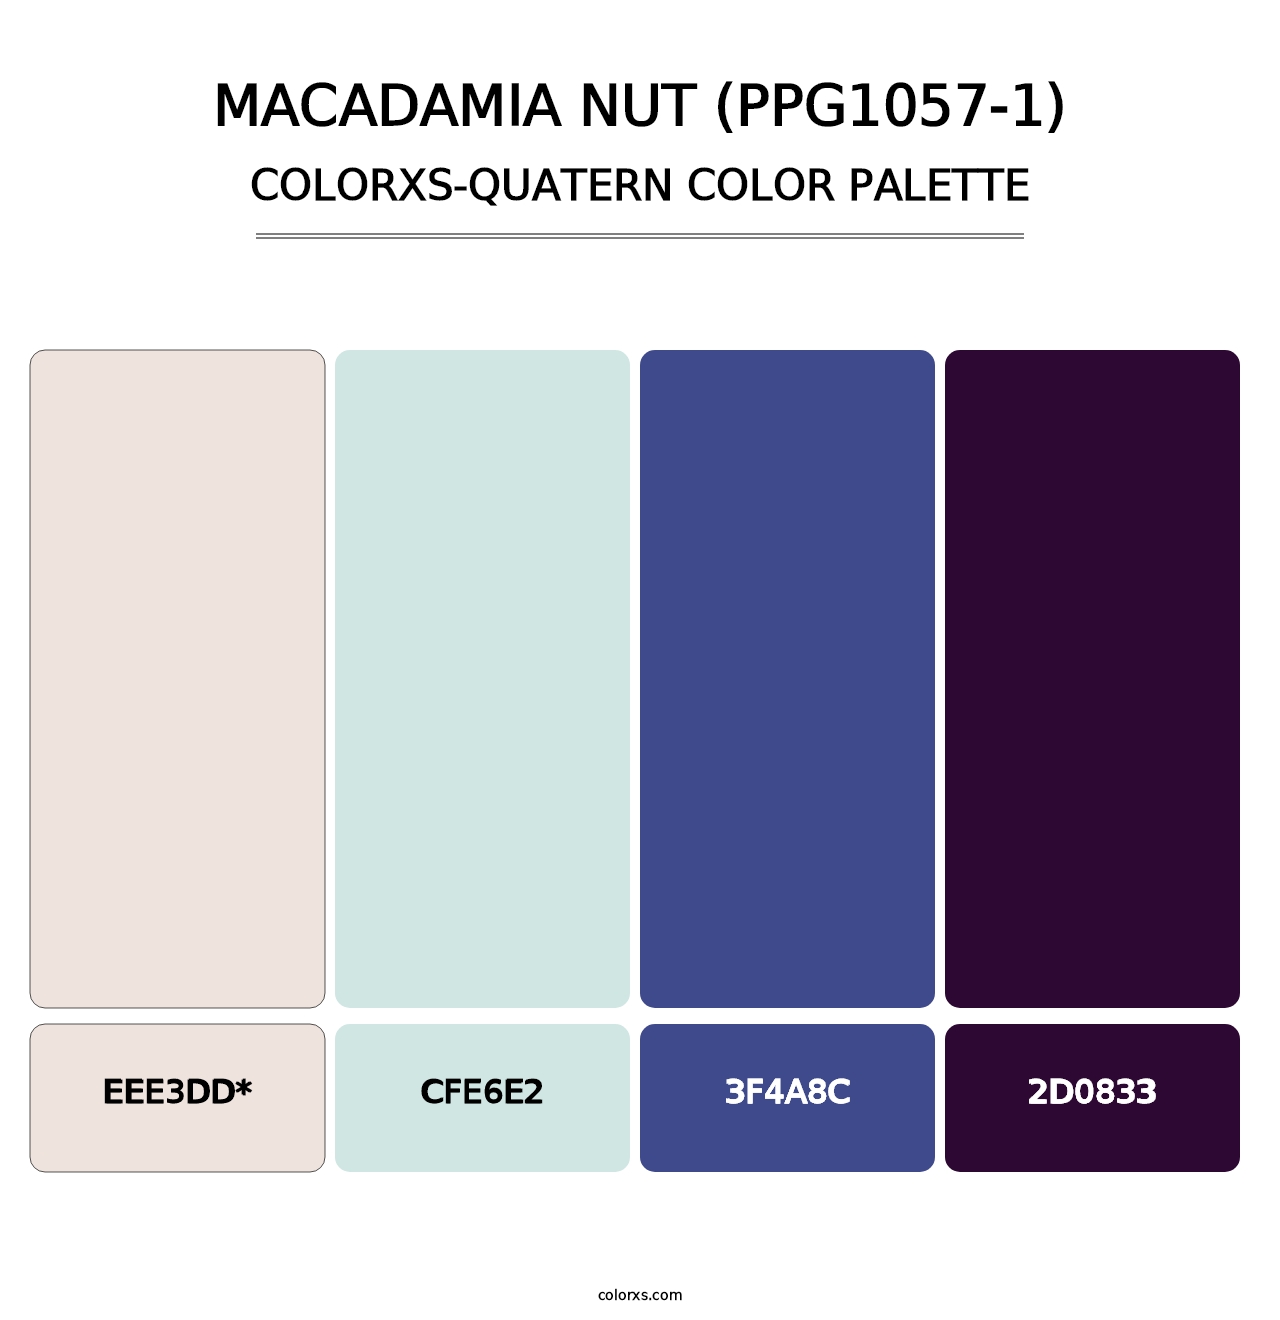 Macadamia Nut (PPG1057-1) - Colorxs Quatern Palette